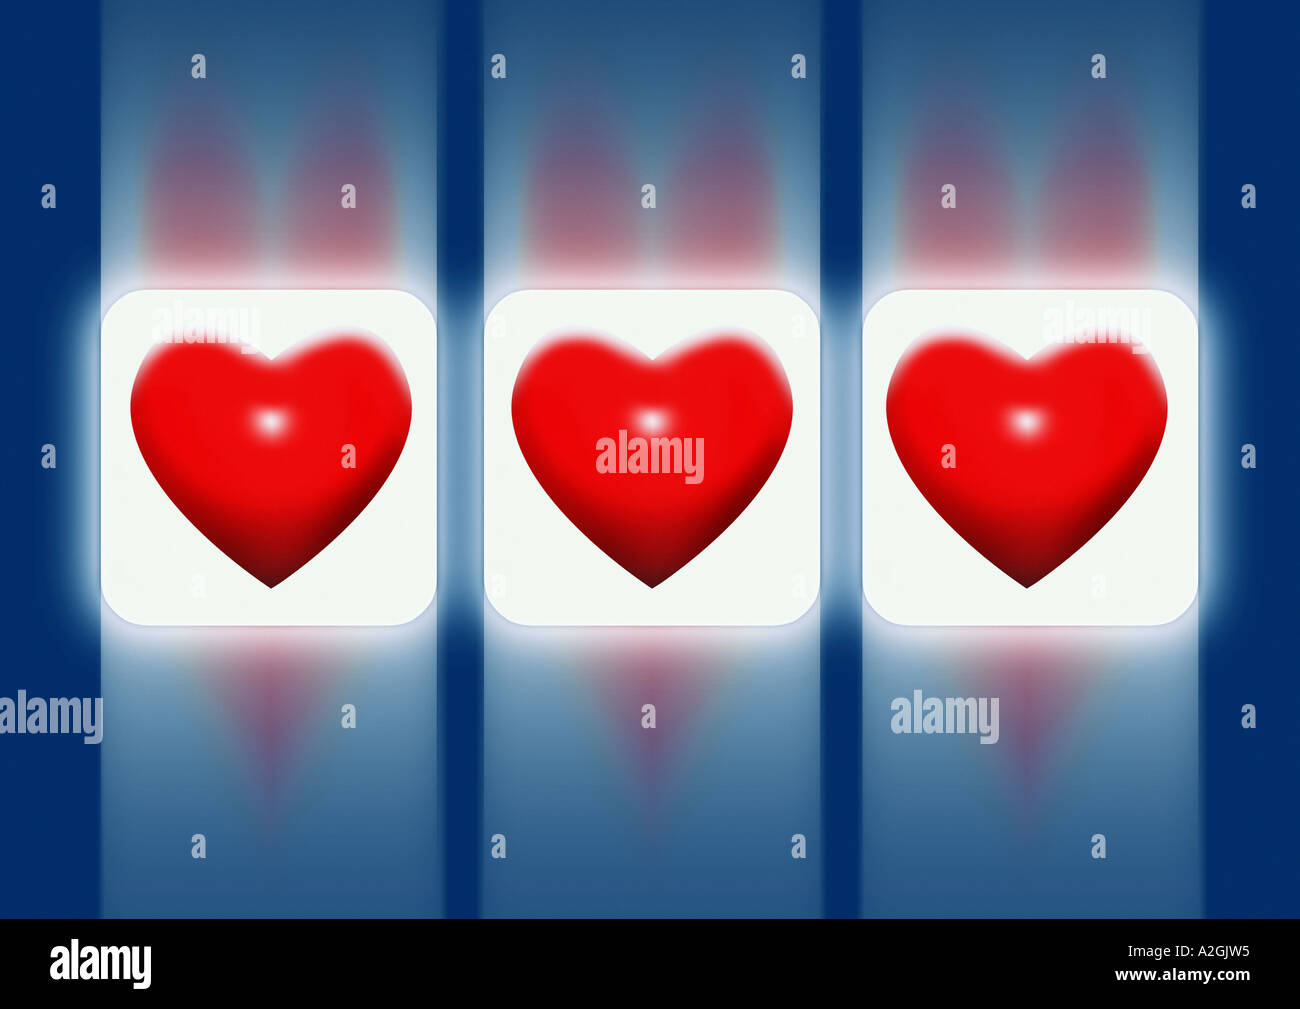 Trois coeurs sur une machine à sous Afficher 3 auf dem Herzen und Spielautomaten Affichage Banque D'Images